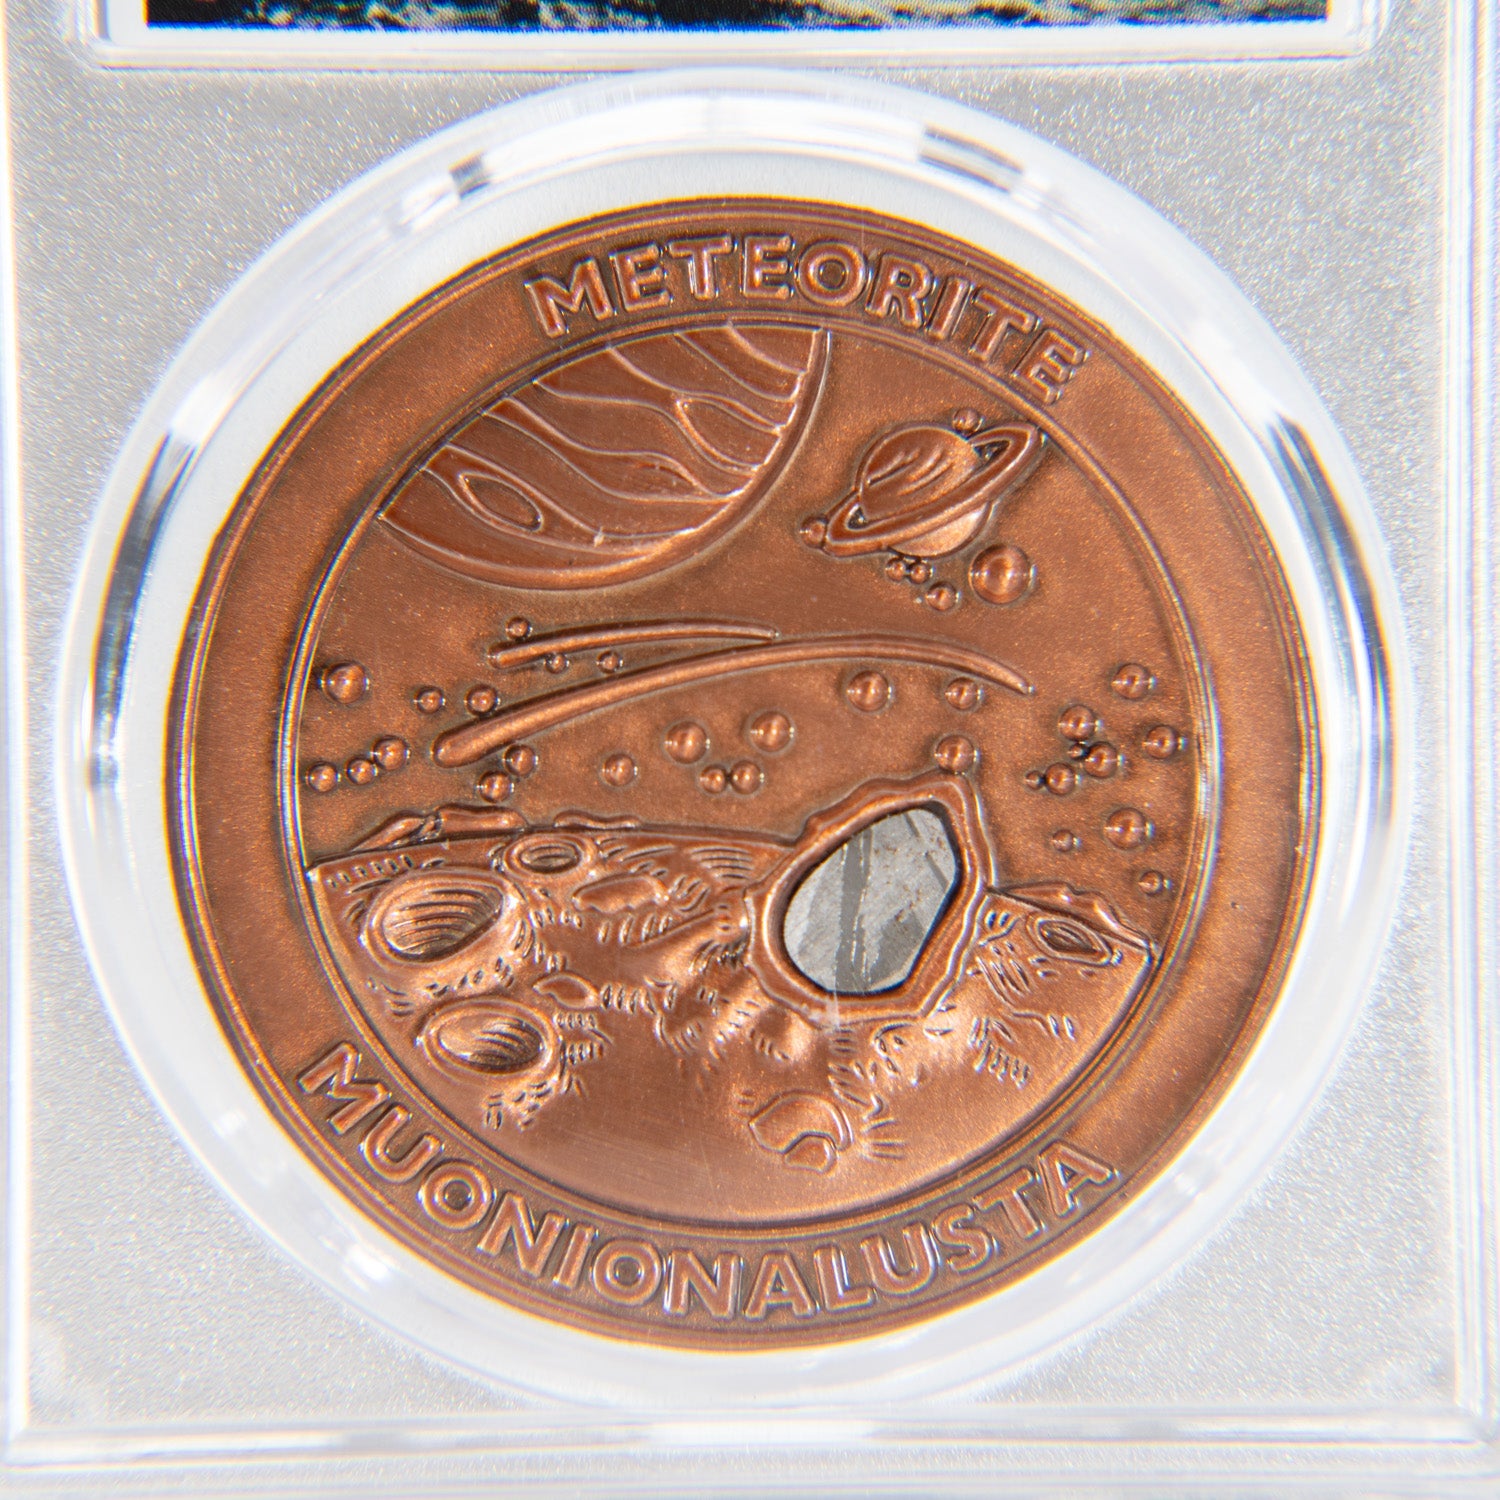 Genuine Muonionalusta Meteorite Coin (Bronze)